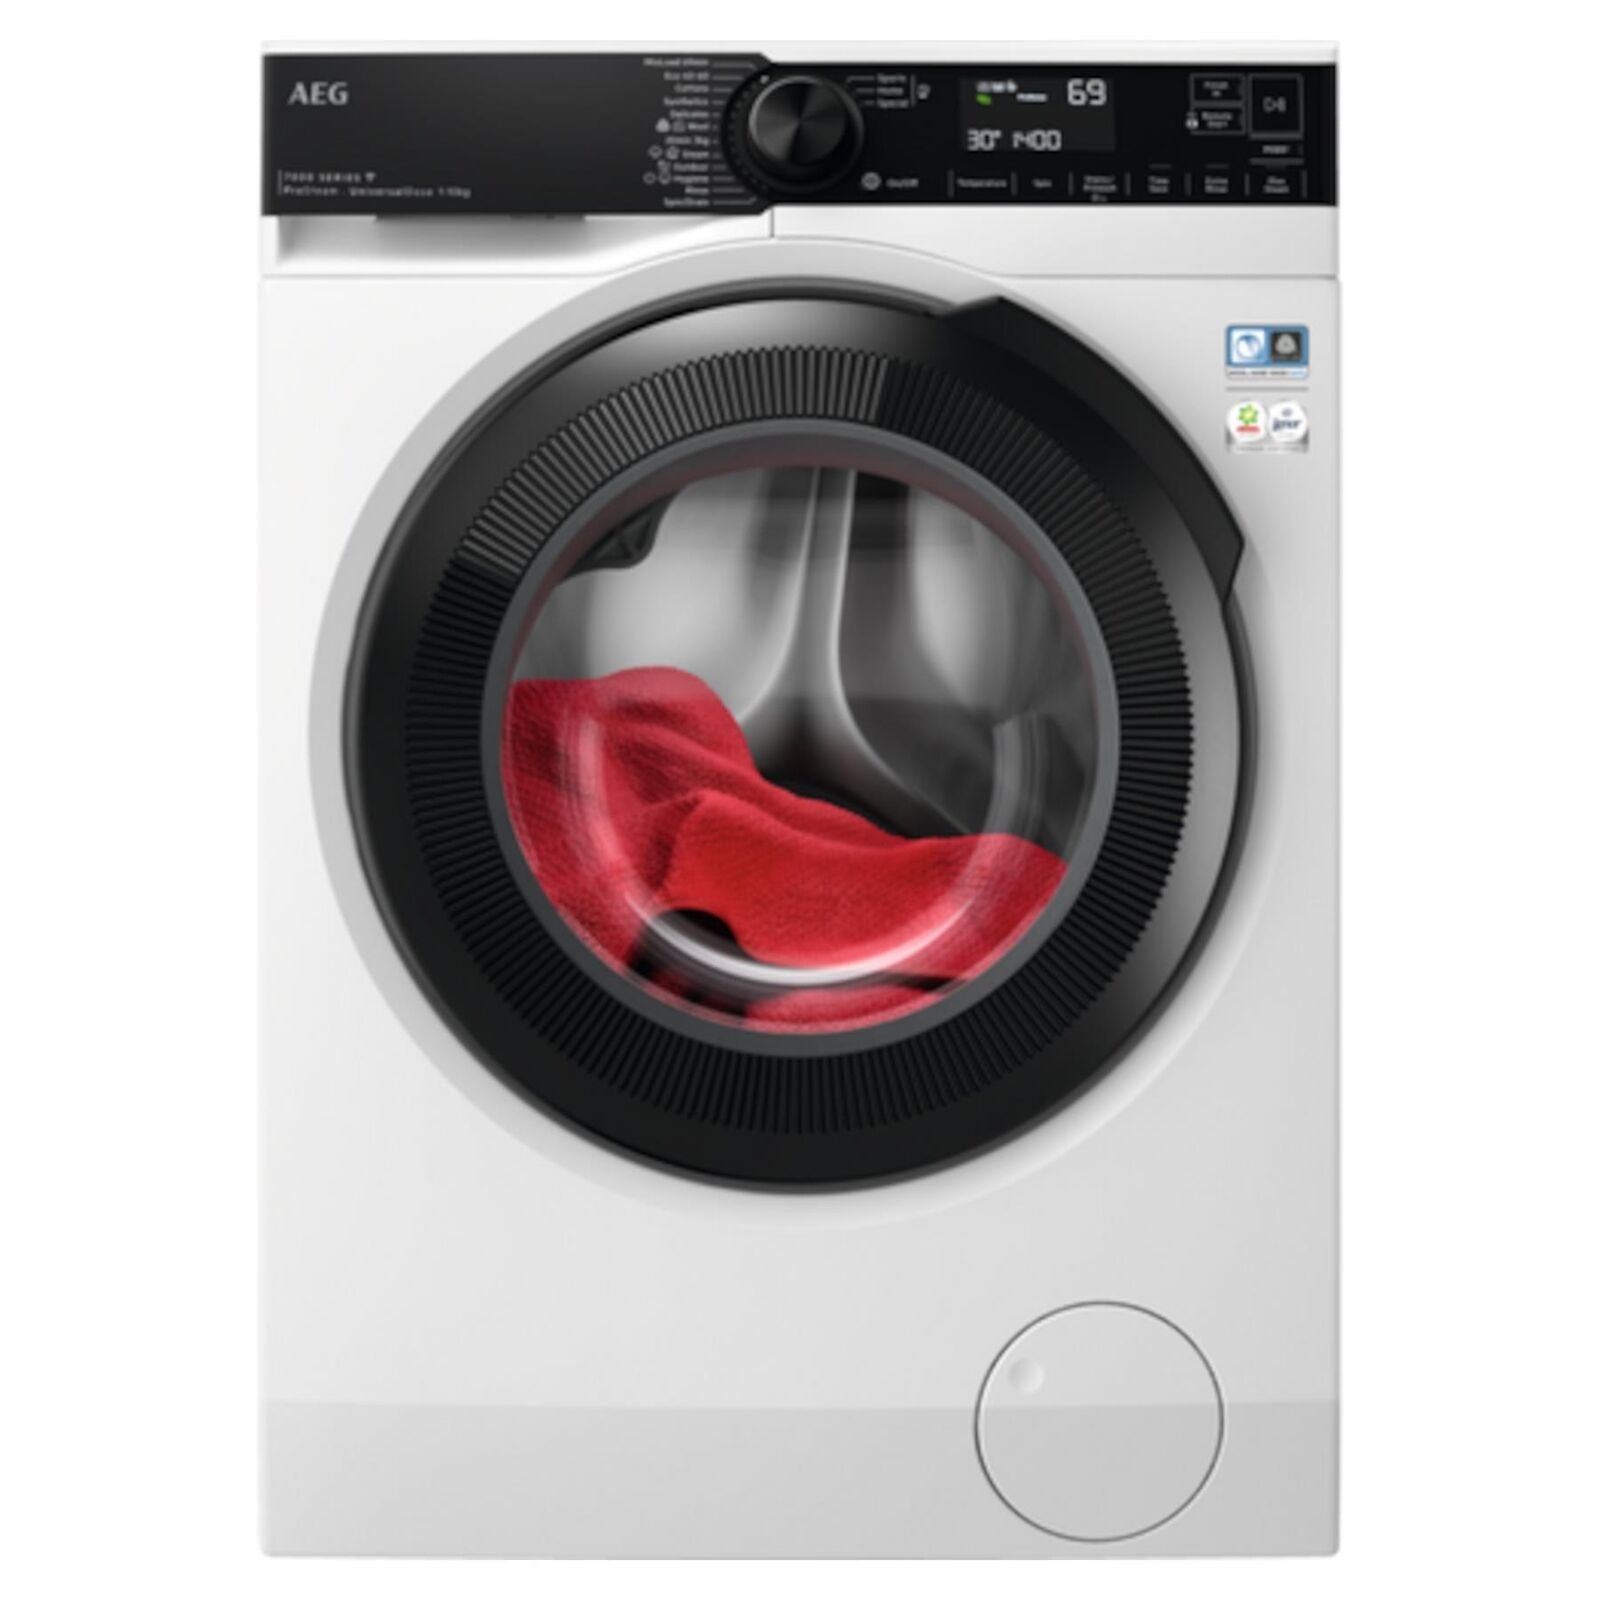 AEG LFR74164UC Washing Machine 10kg 1600rpm in White REFURBISHED